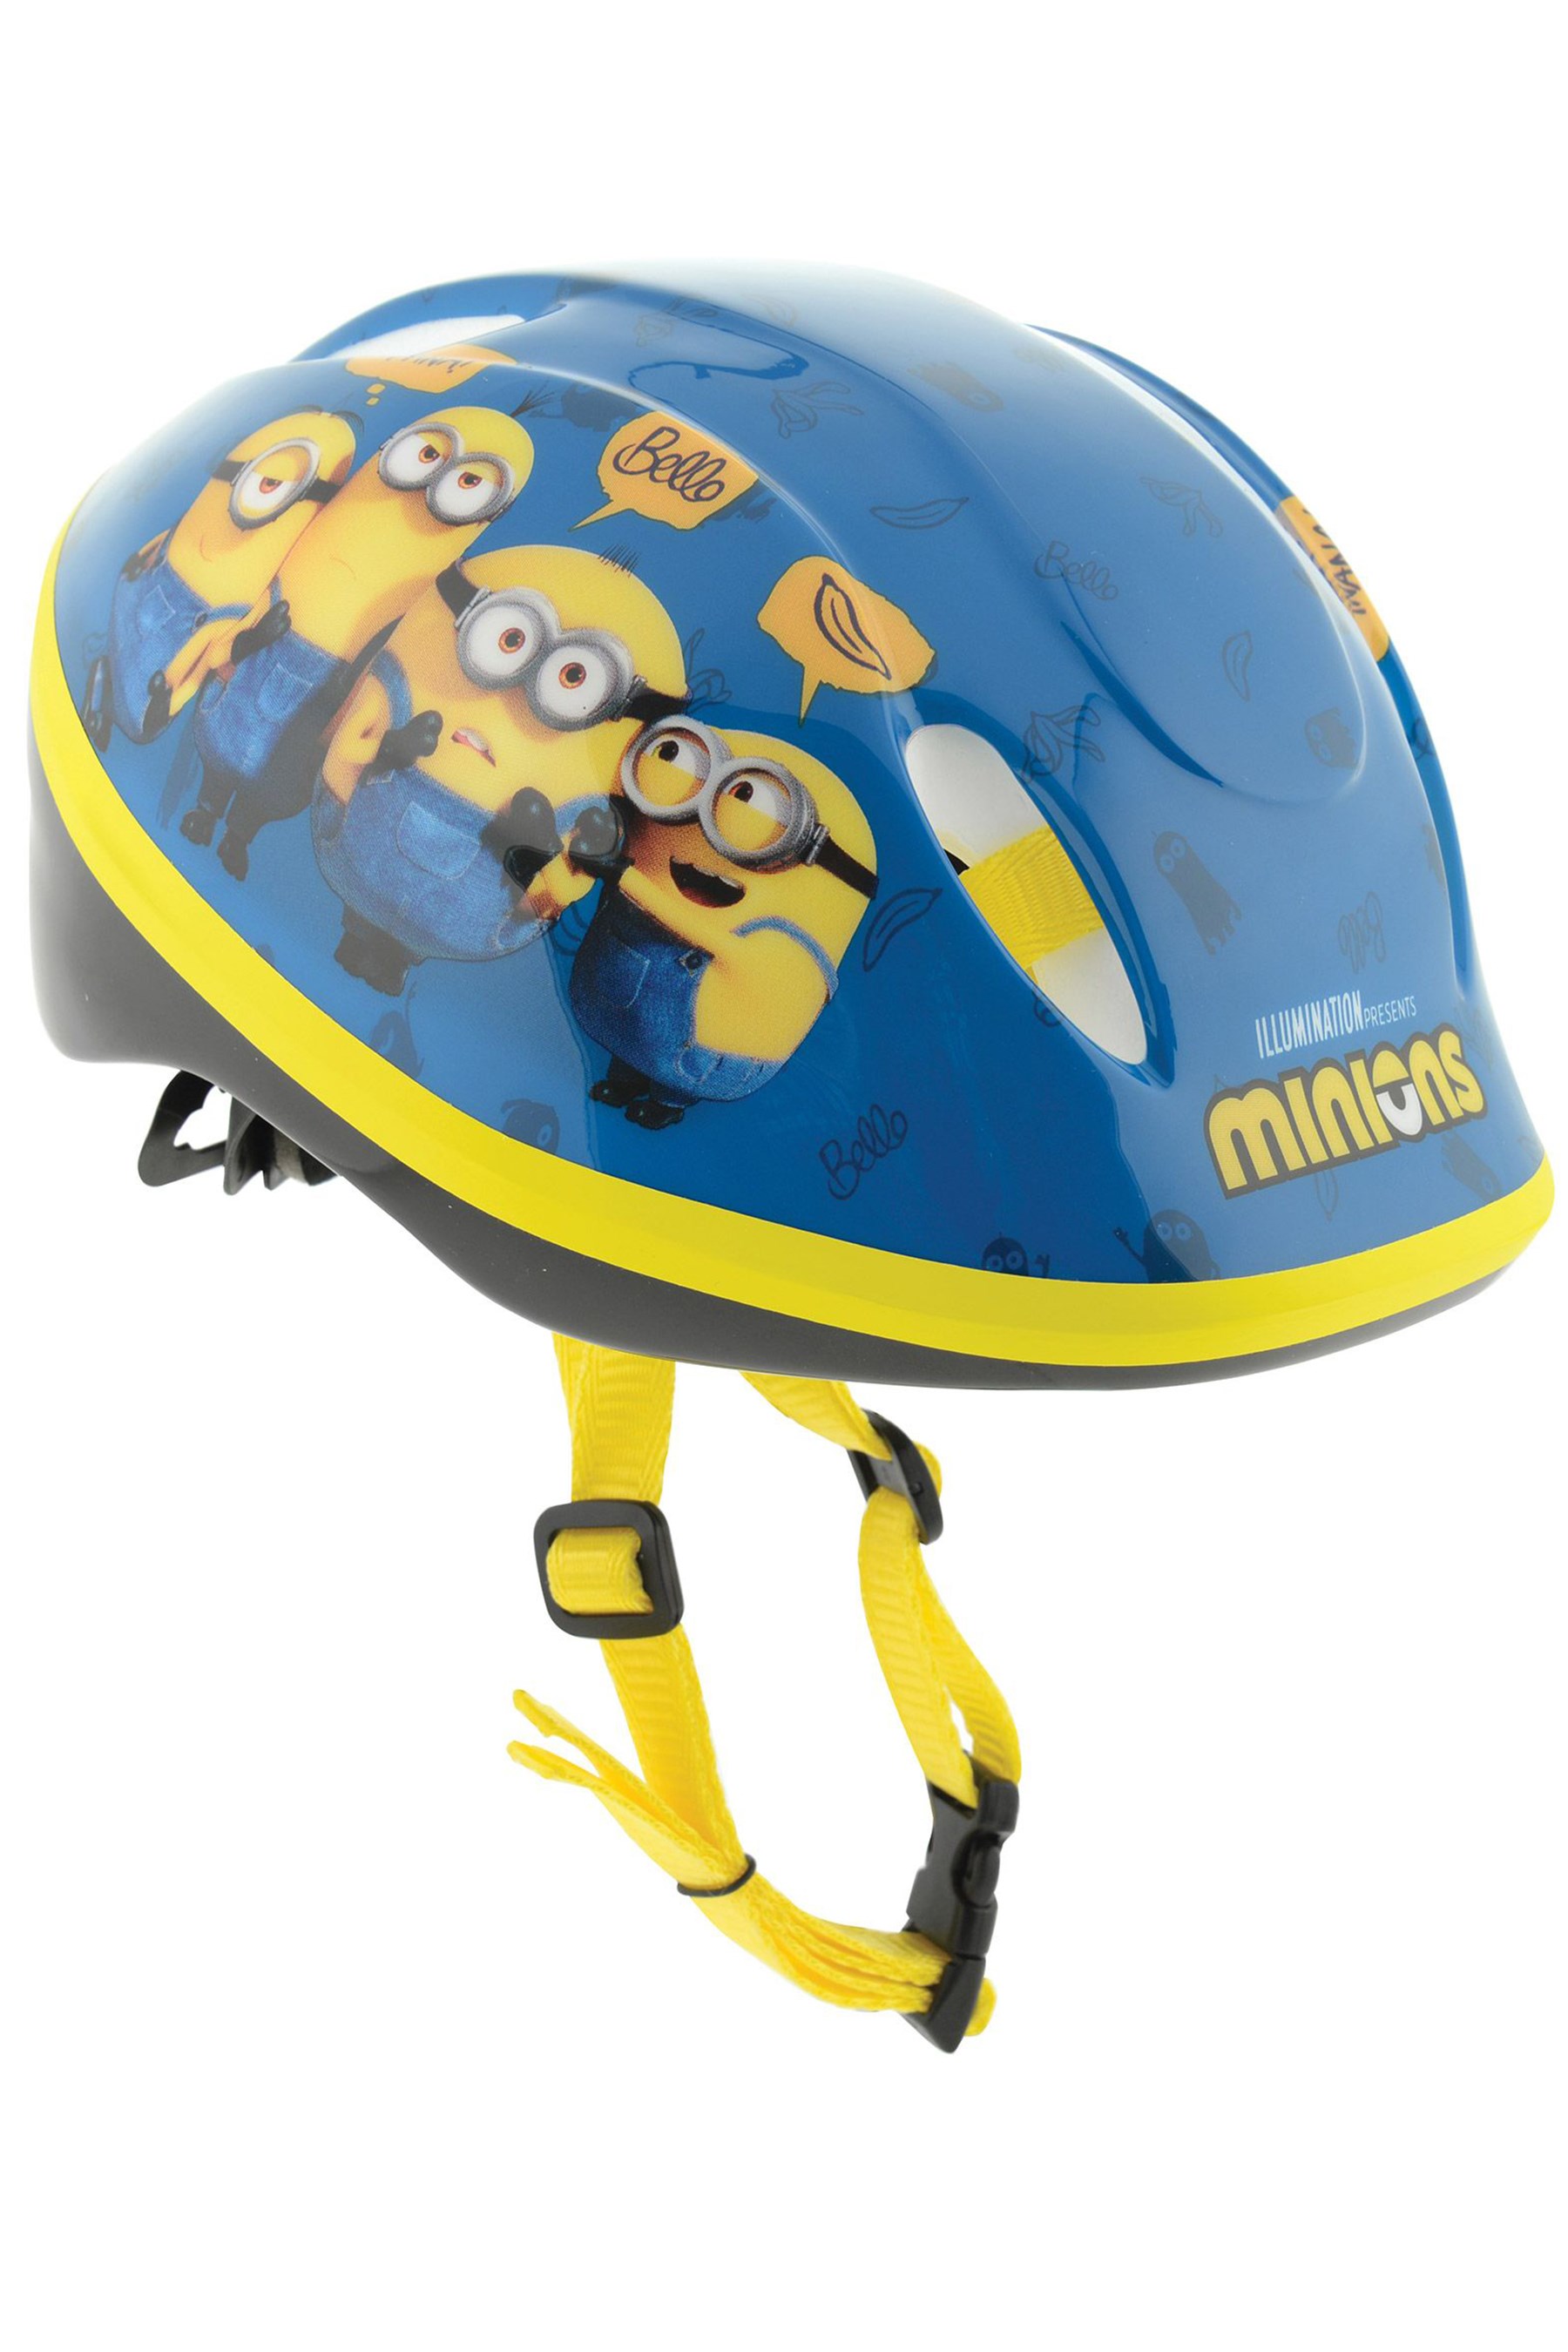 Minions 2 Kids Safety Cycling Helmet 48-54cm -